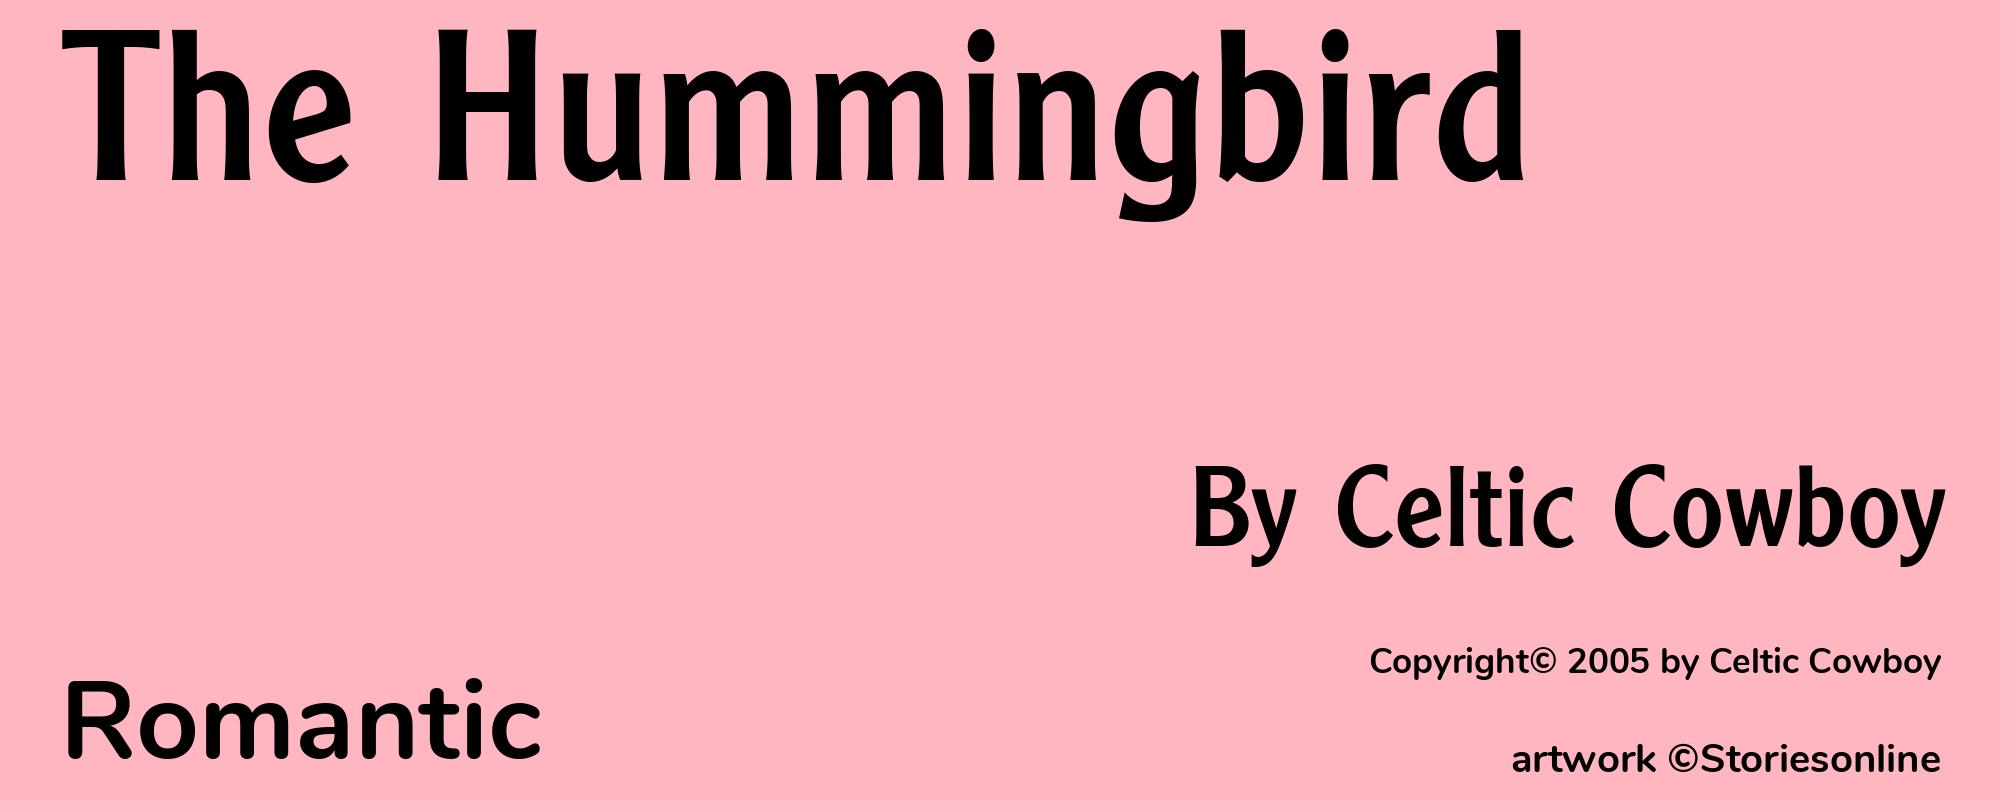 The Hummingbird - Cover